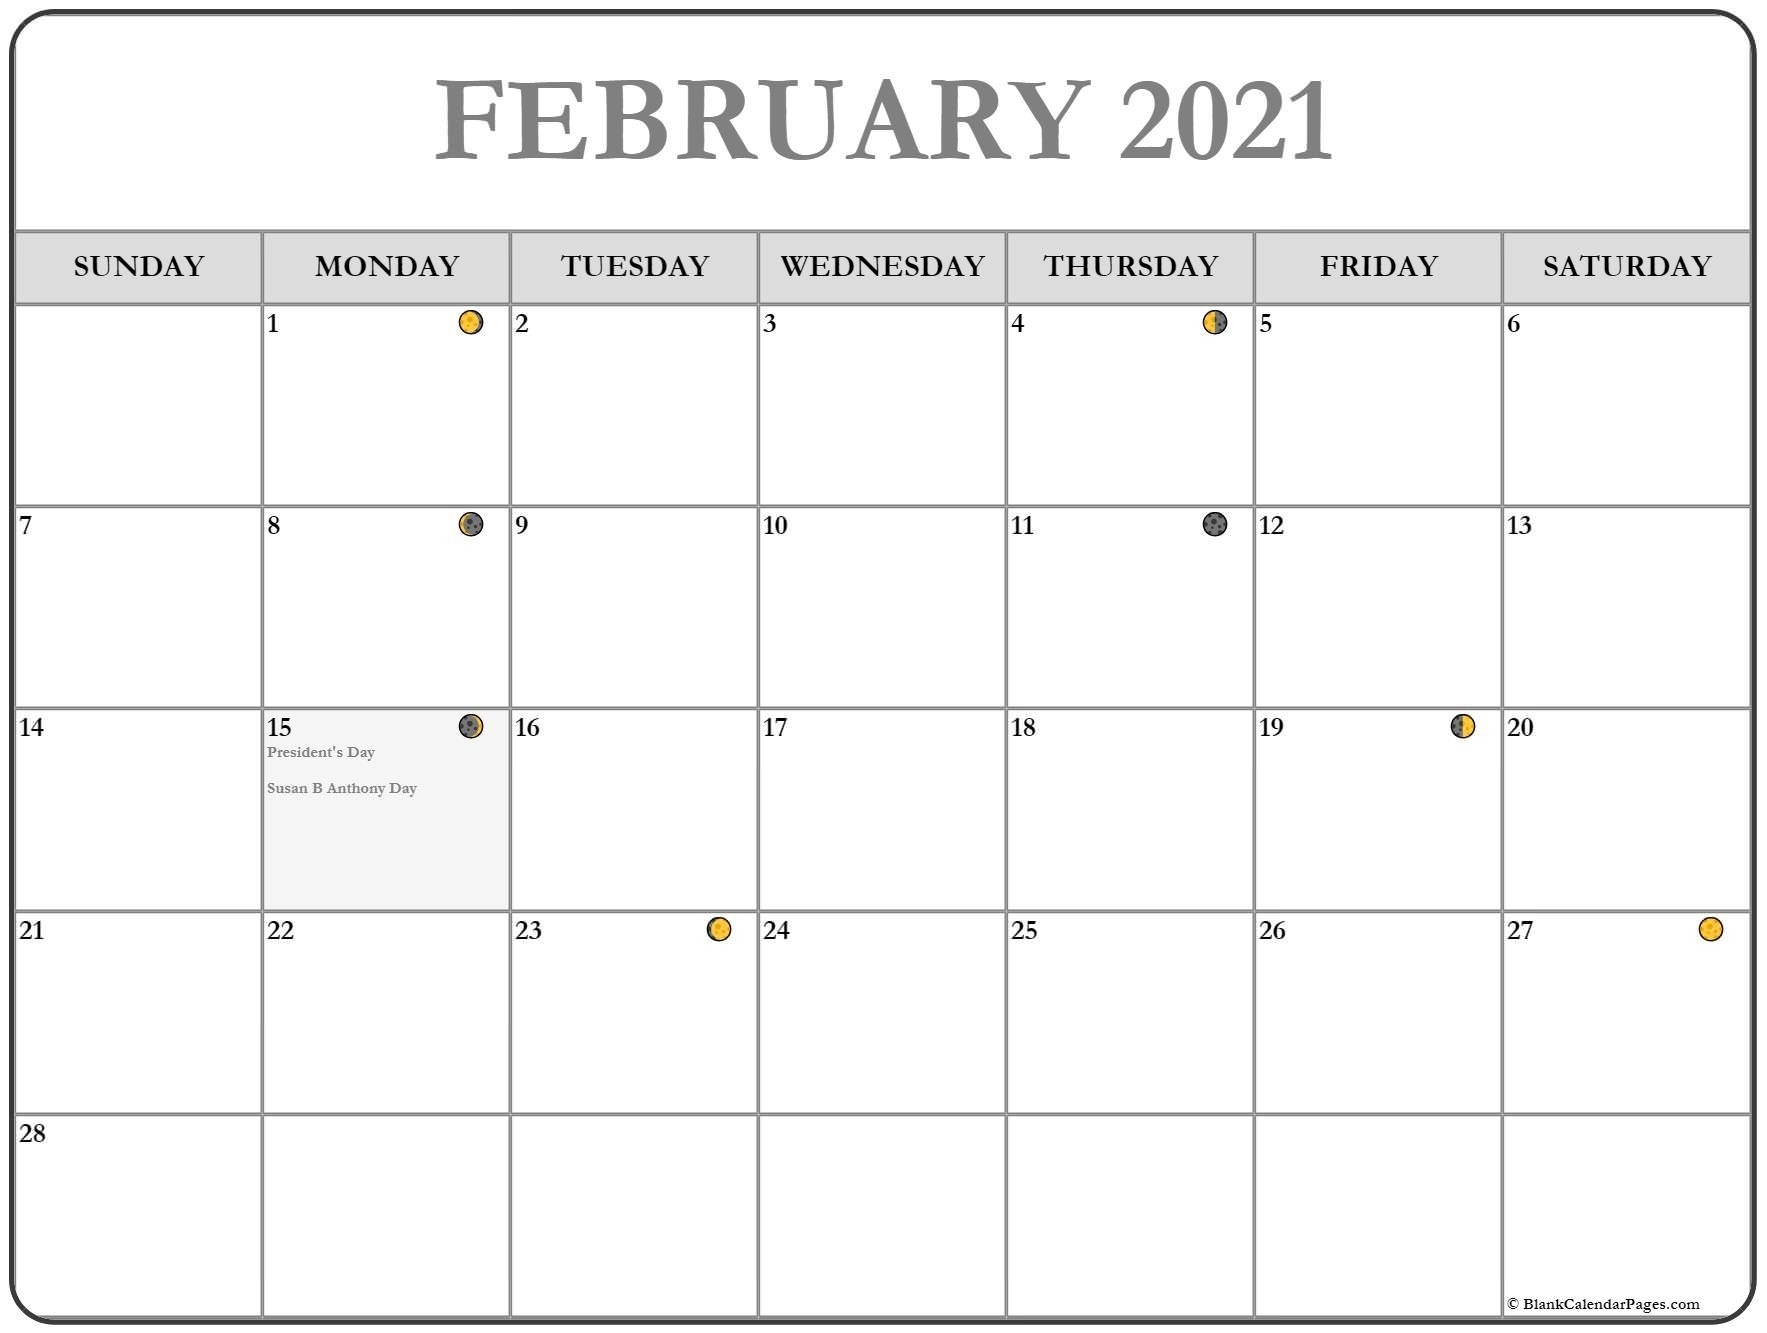 February 2021 Full Moon Phases Calendar - Calendar 2020 October 2021 Lunar Calendar